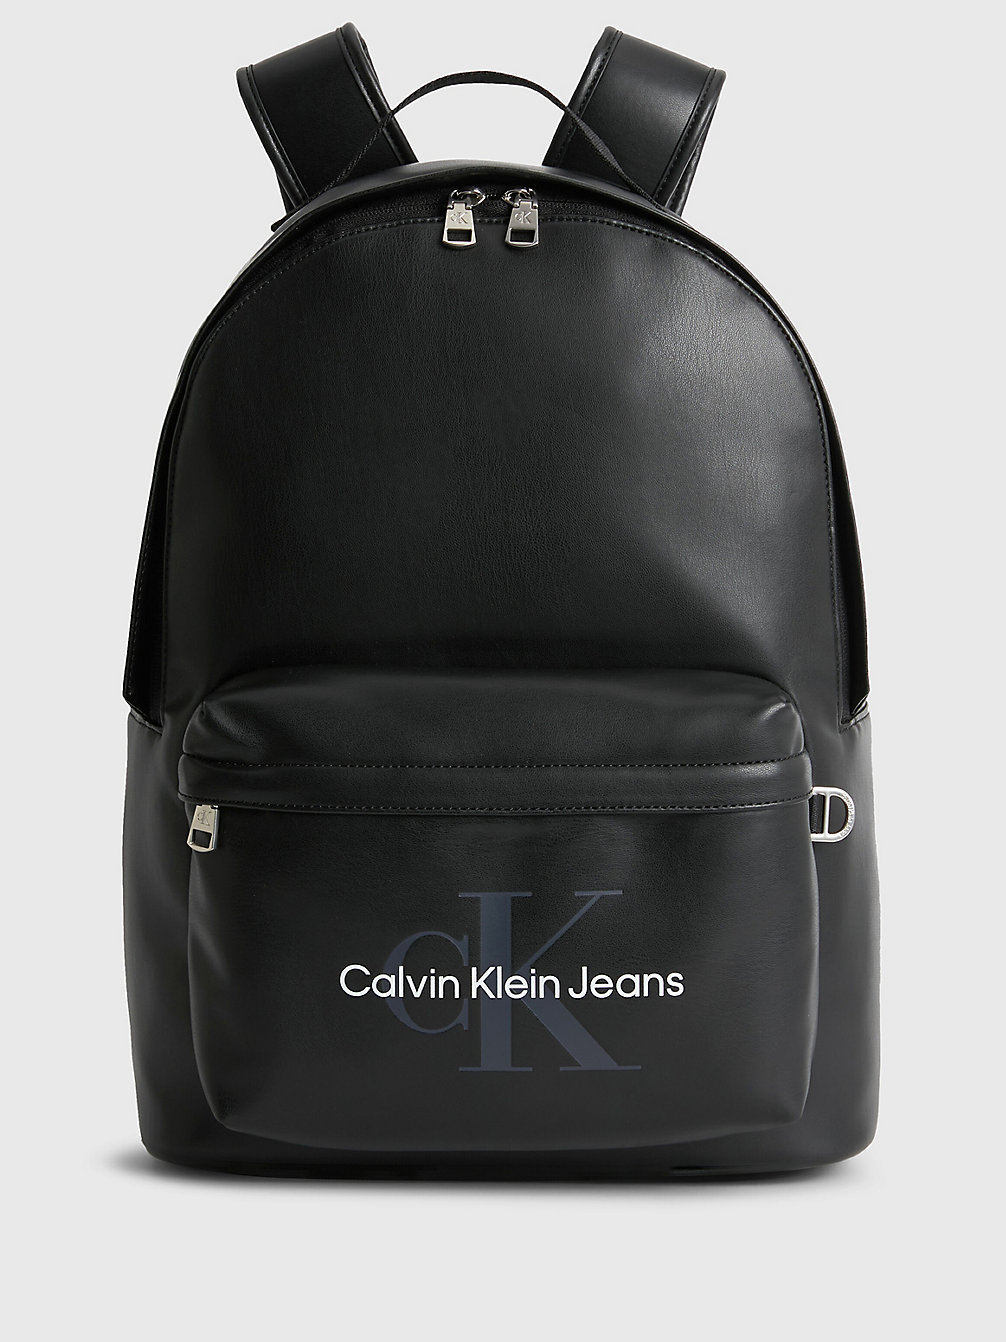 BLACK > Okrągły Plecak > undefined Mężczyźni - Calvin Klein